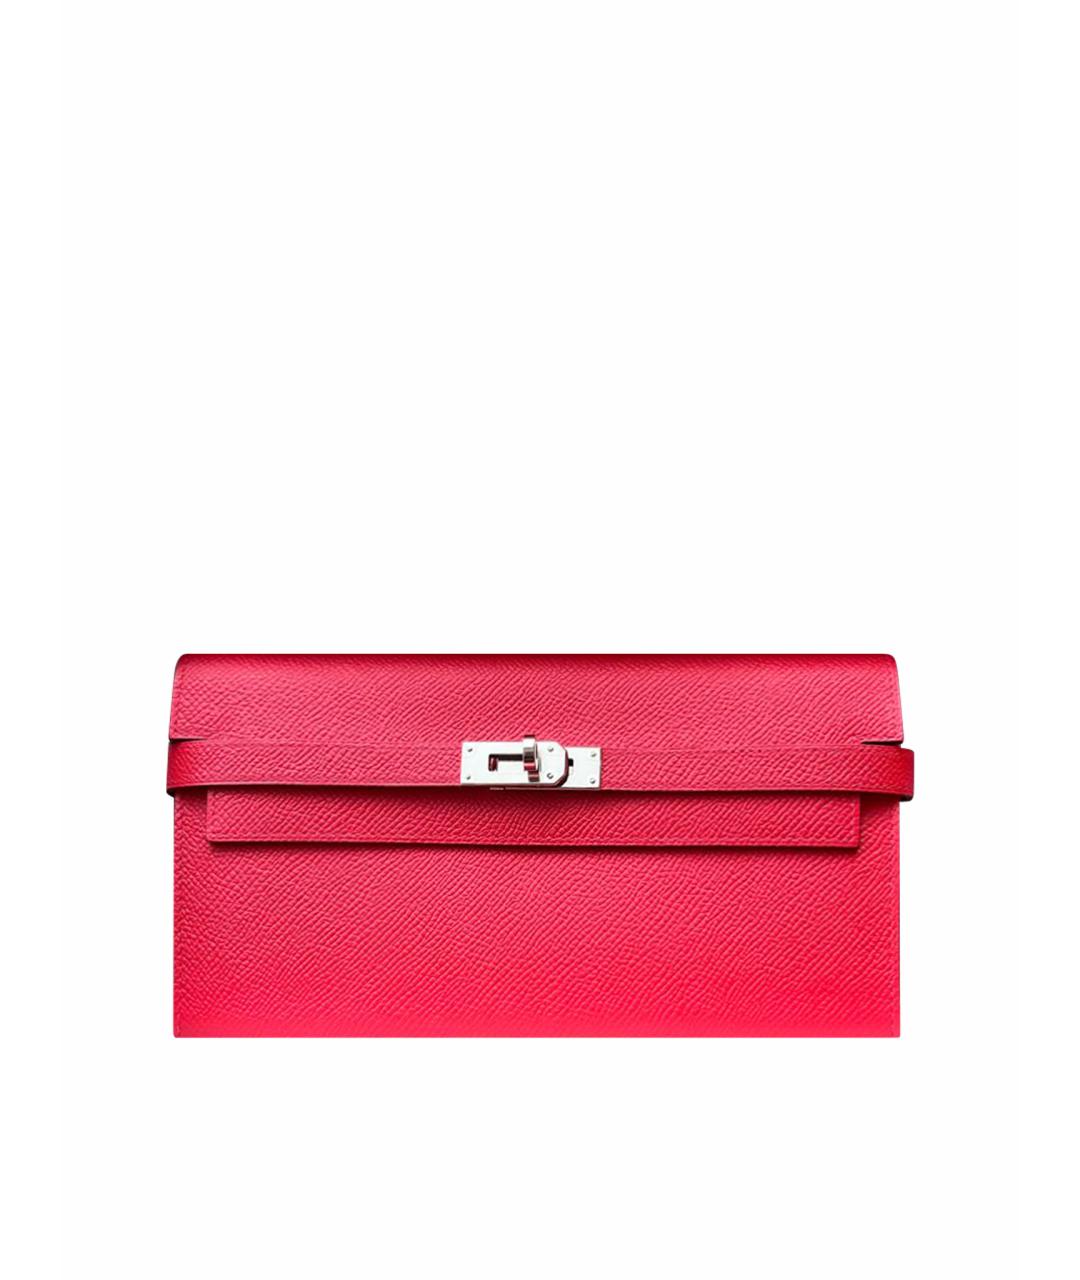 HERMES PRE-OWNED Красный кожаный кошелек, фото 1